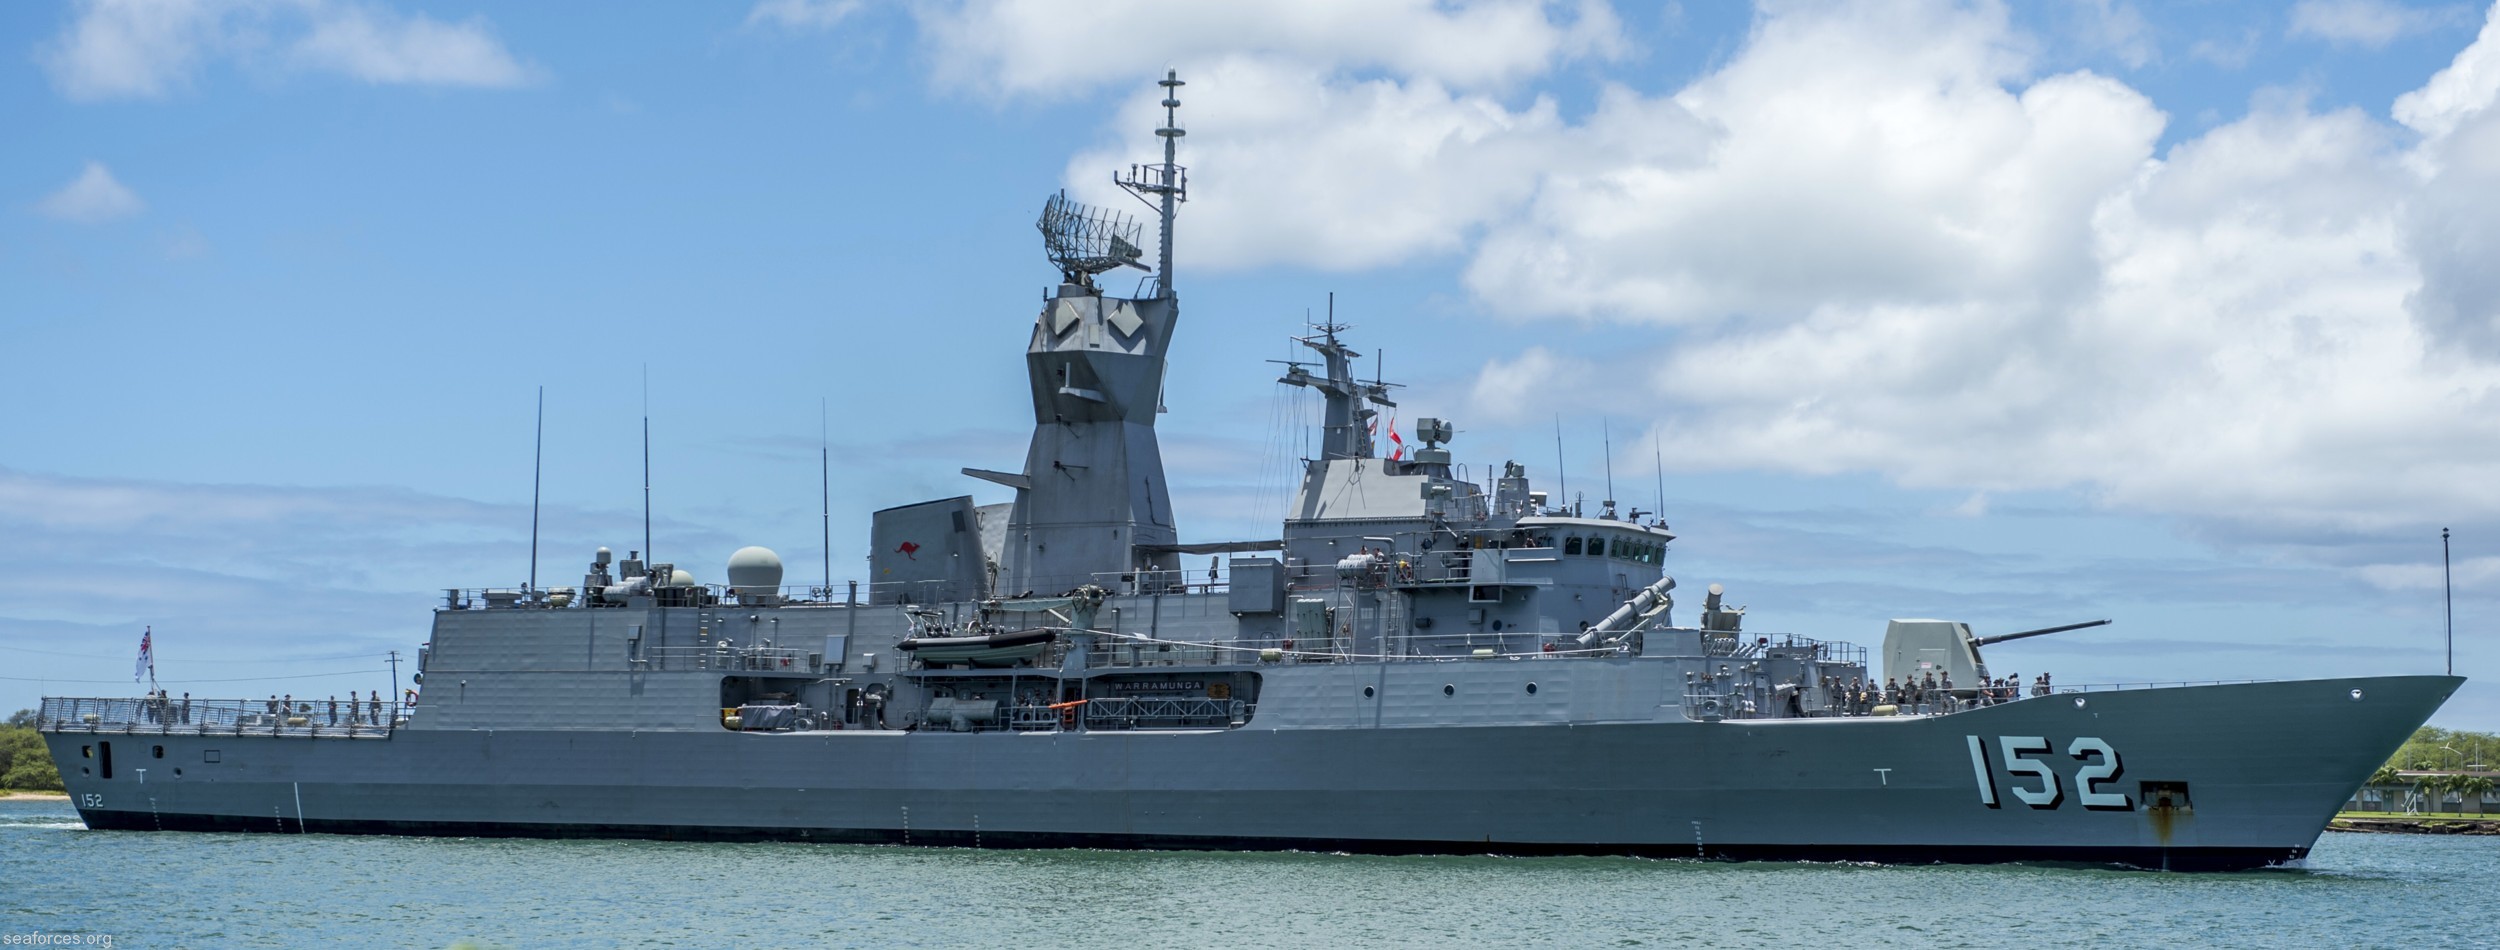 ffh-152 hmas warramunga anzac class frigate royal australian navy 2016 19 pearl harbor hawaii